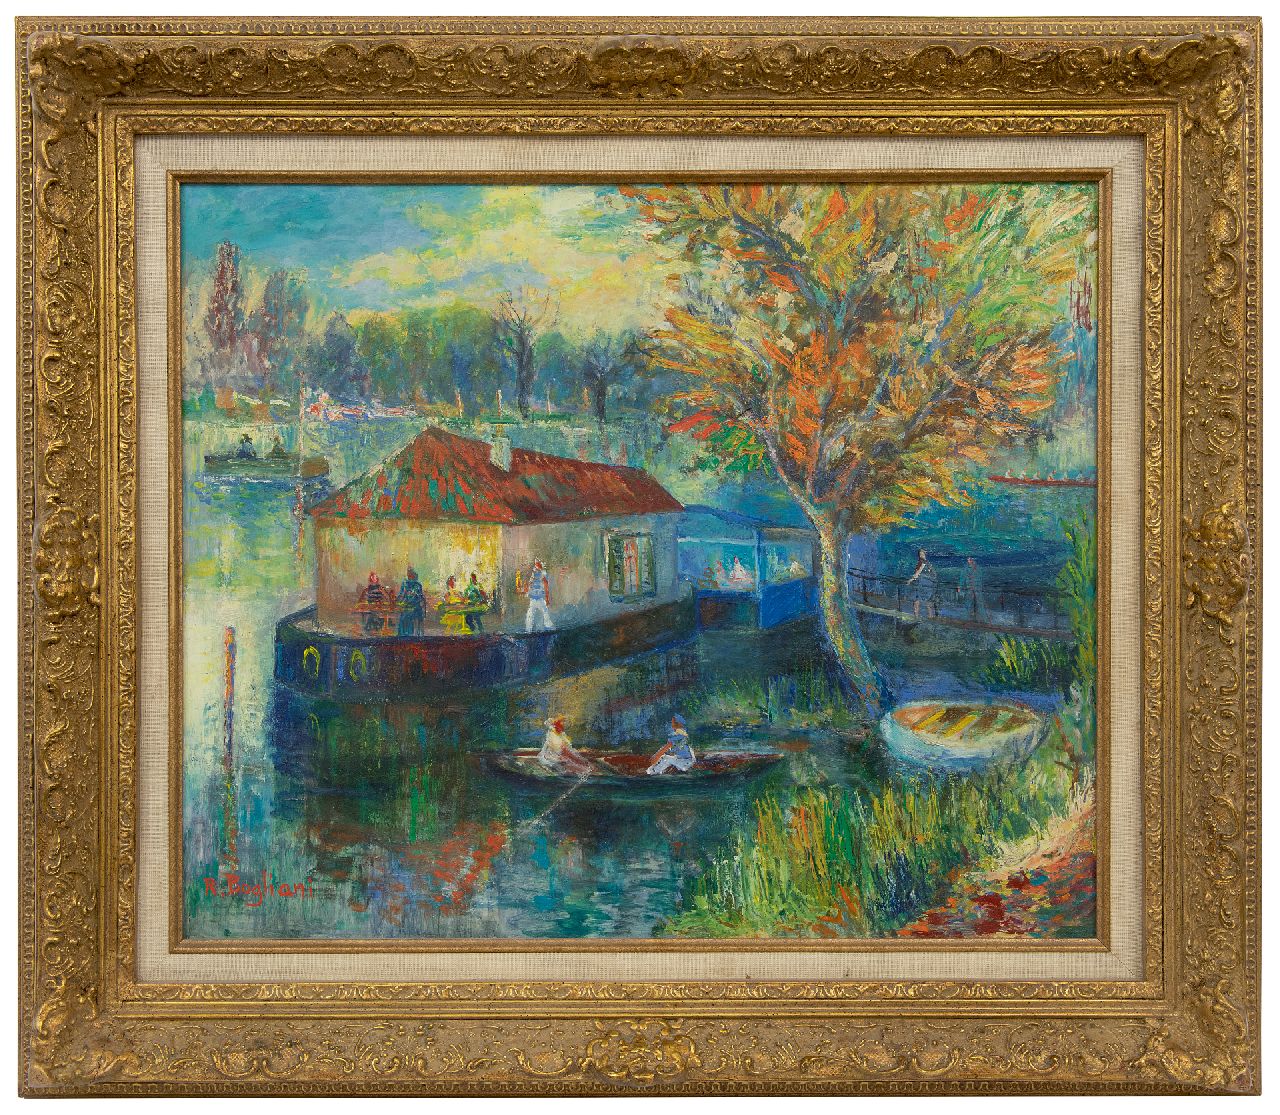 Bogliani R.  | Robert. Bogliani | Paintings offered for sale | summer café on the river, oil on board 50.0 x 61.0 cm, signed l.l.